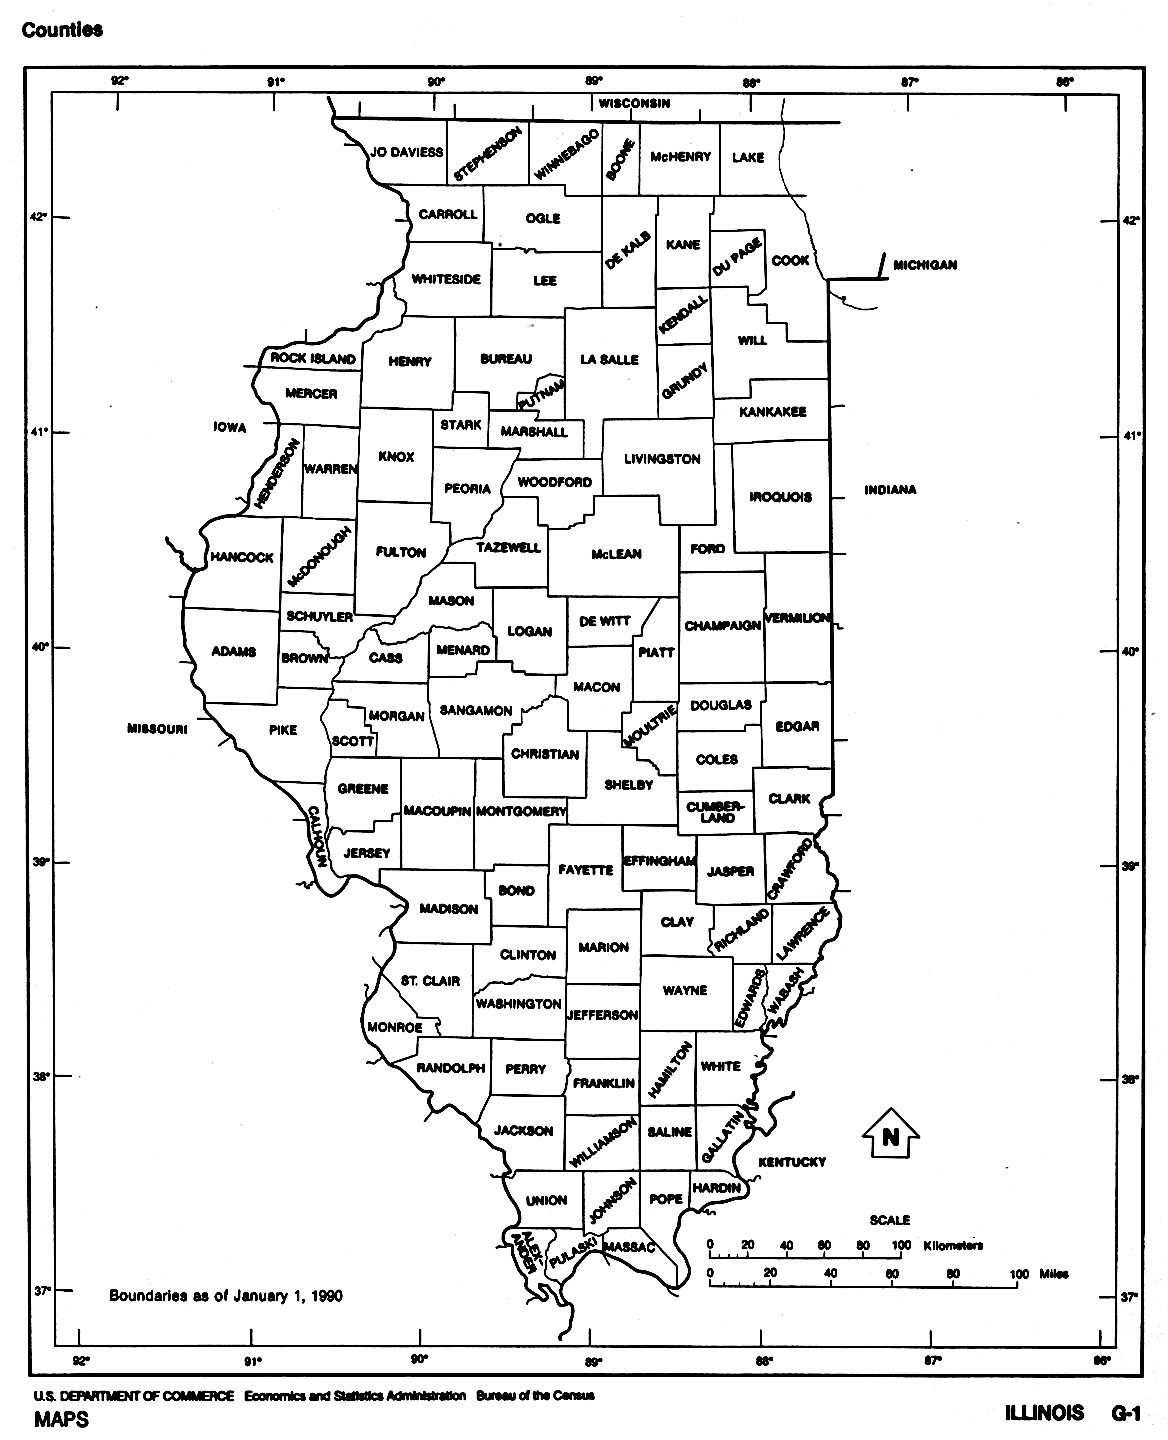  Maps of Illinois. Illinois (outline map) (96K) 